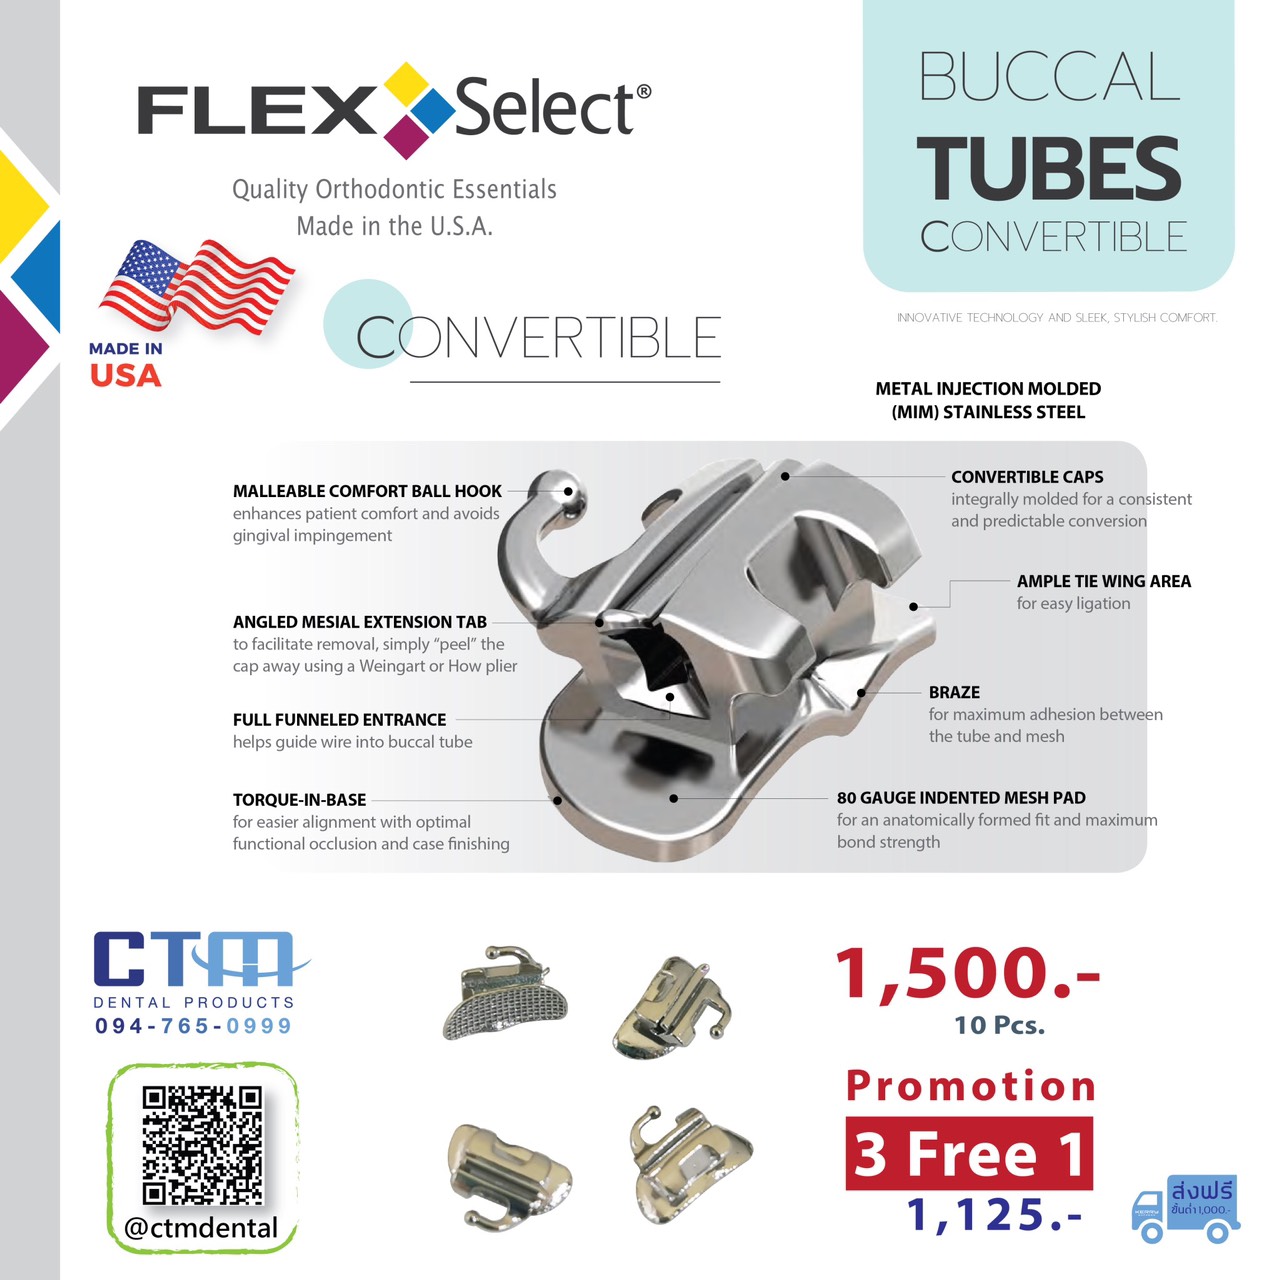 FLEX Select BUCCAL TUBES CONVERTIBLE